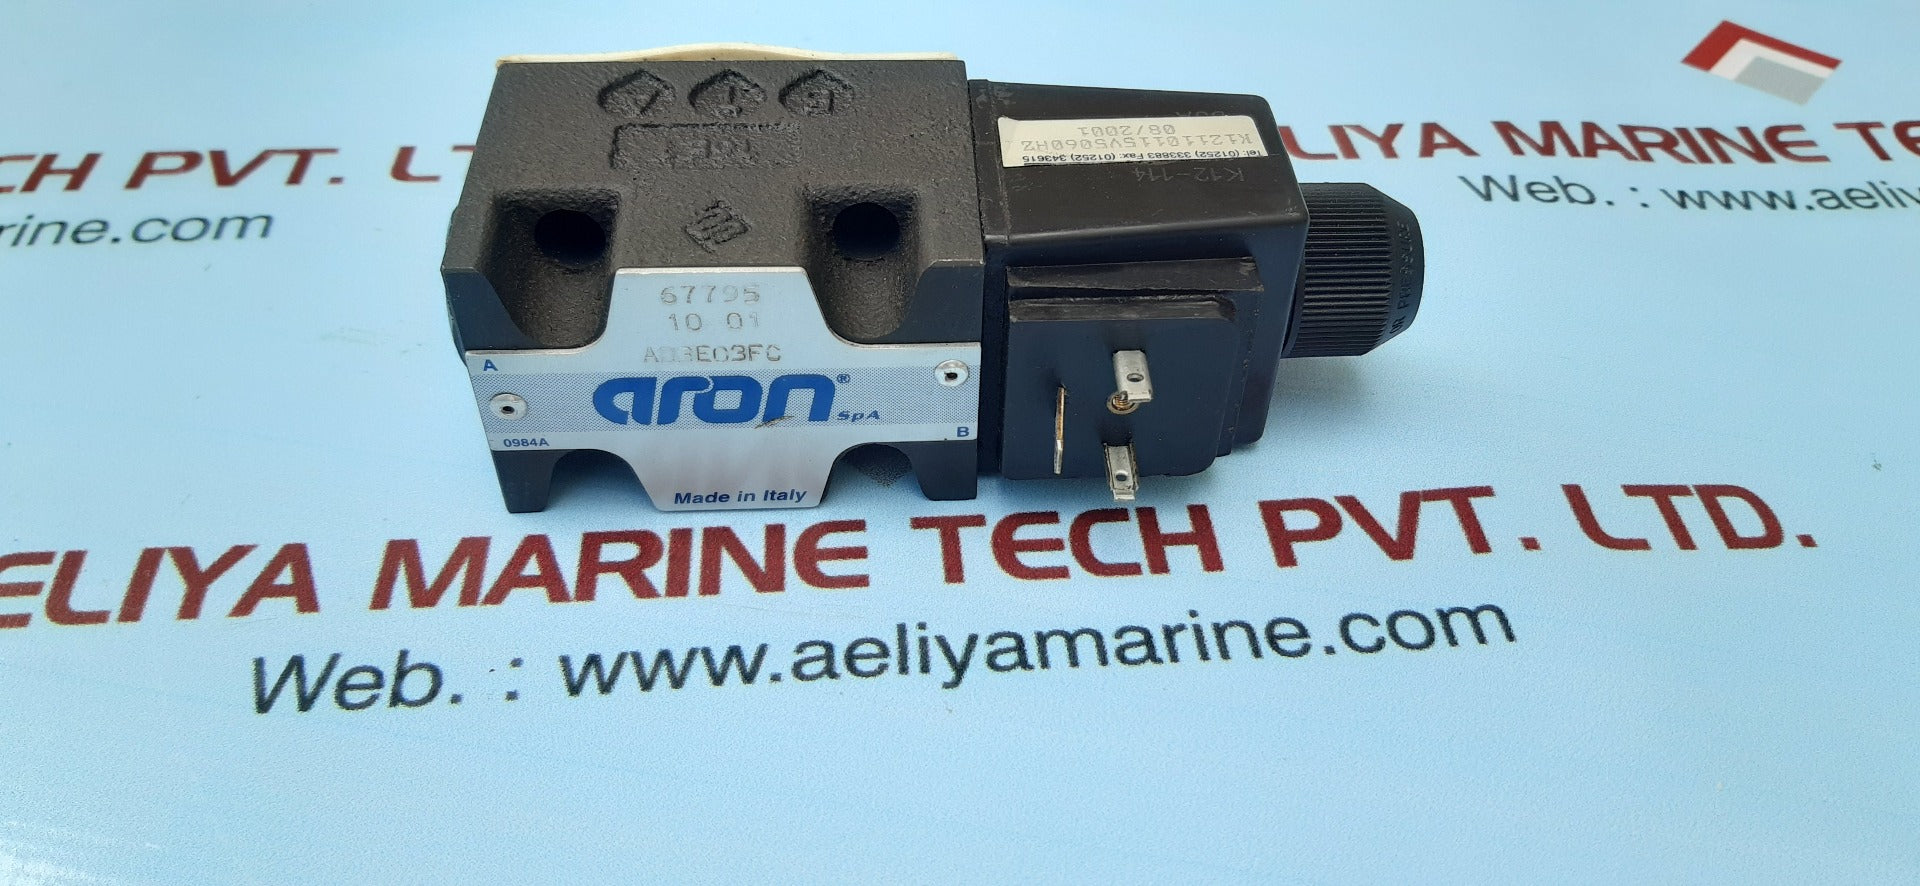 Aron ad3e03fc solenoid valve